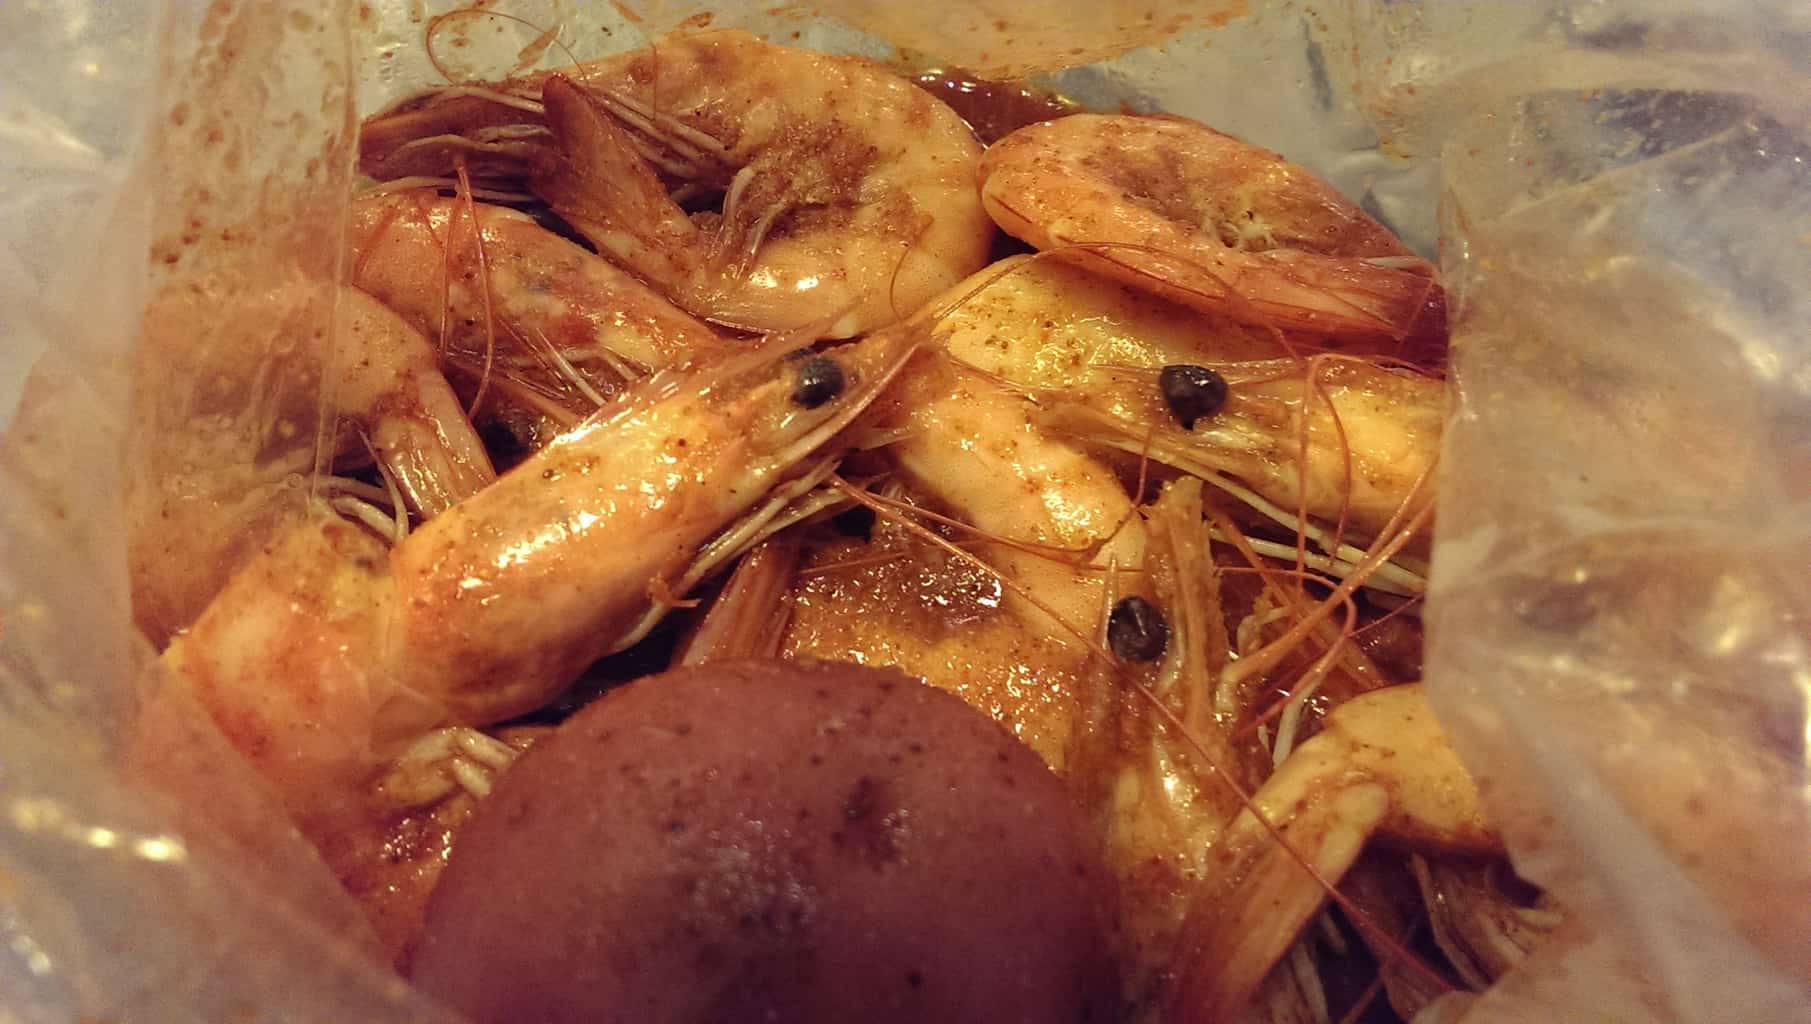 shrimps with juicy cajun seasoning with corn and potatoes